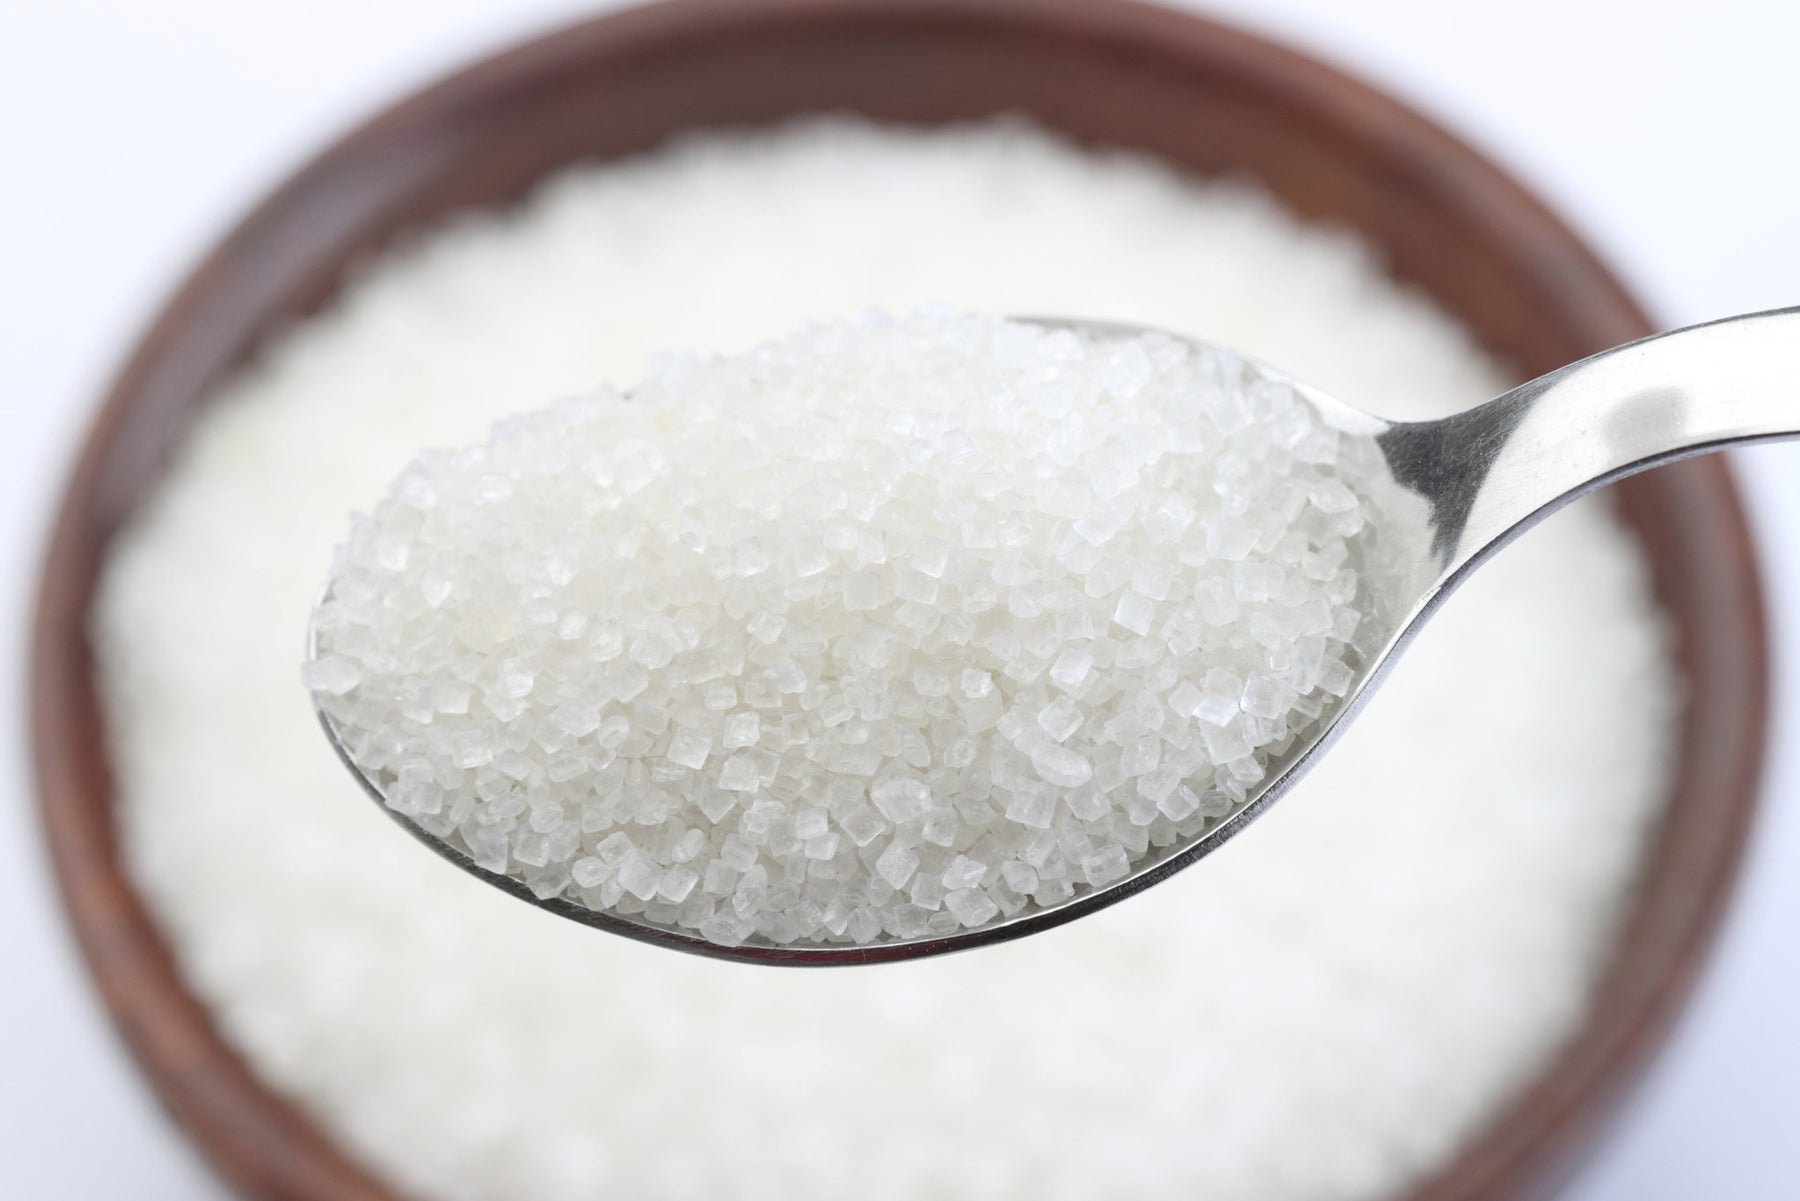 146 Reasons Why Sugar Ruins Your Health… Part 3!